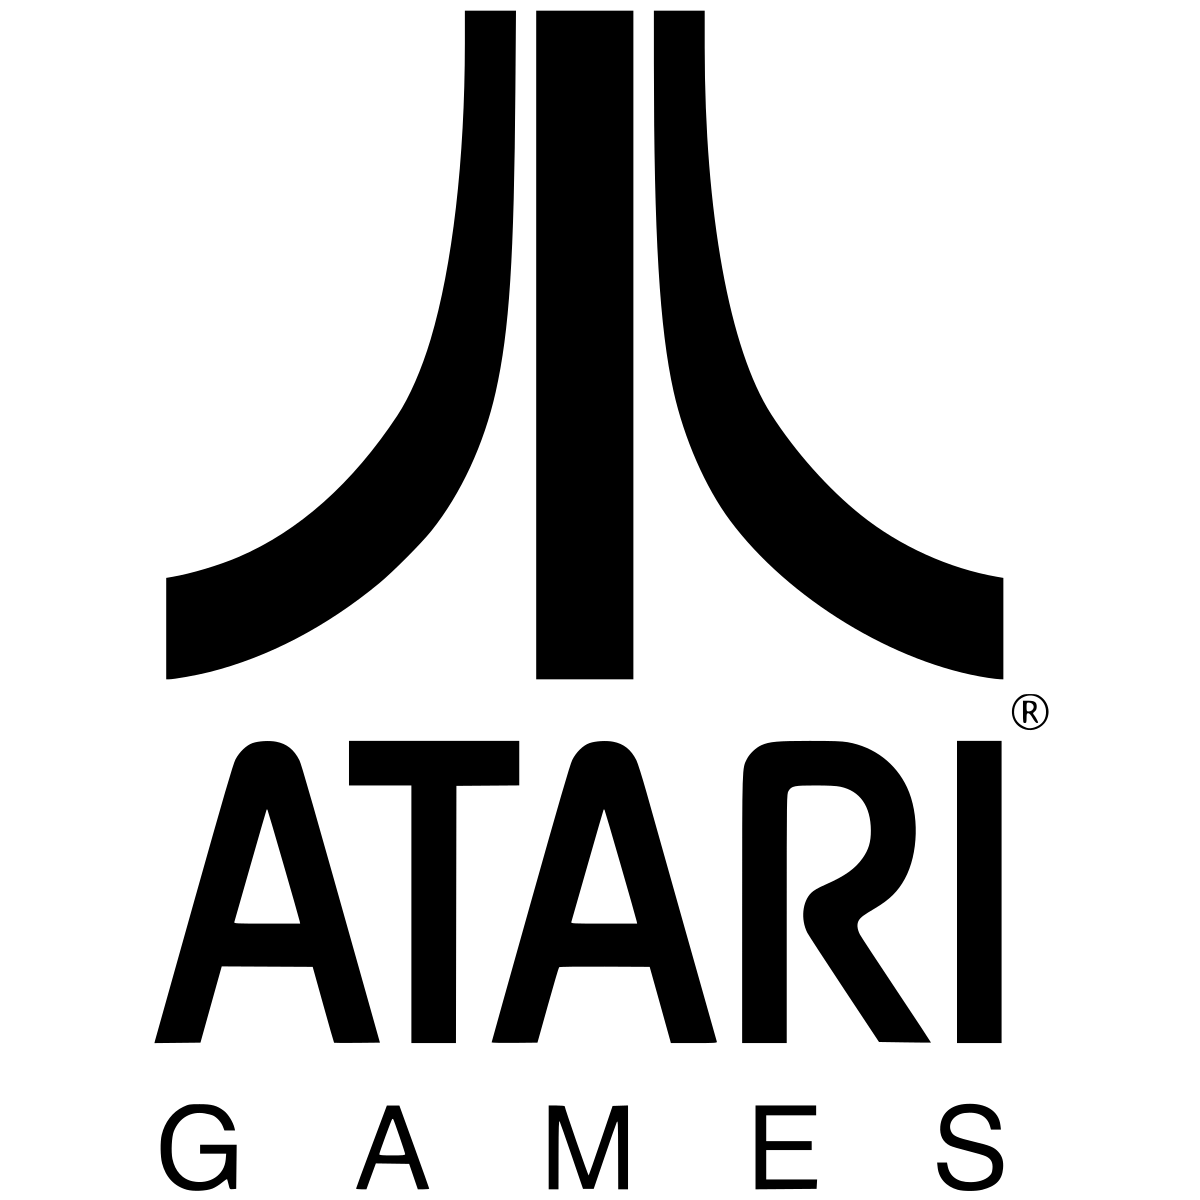 Atari Games developer logo